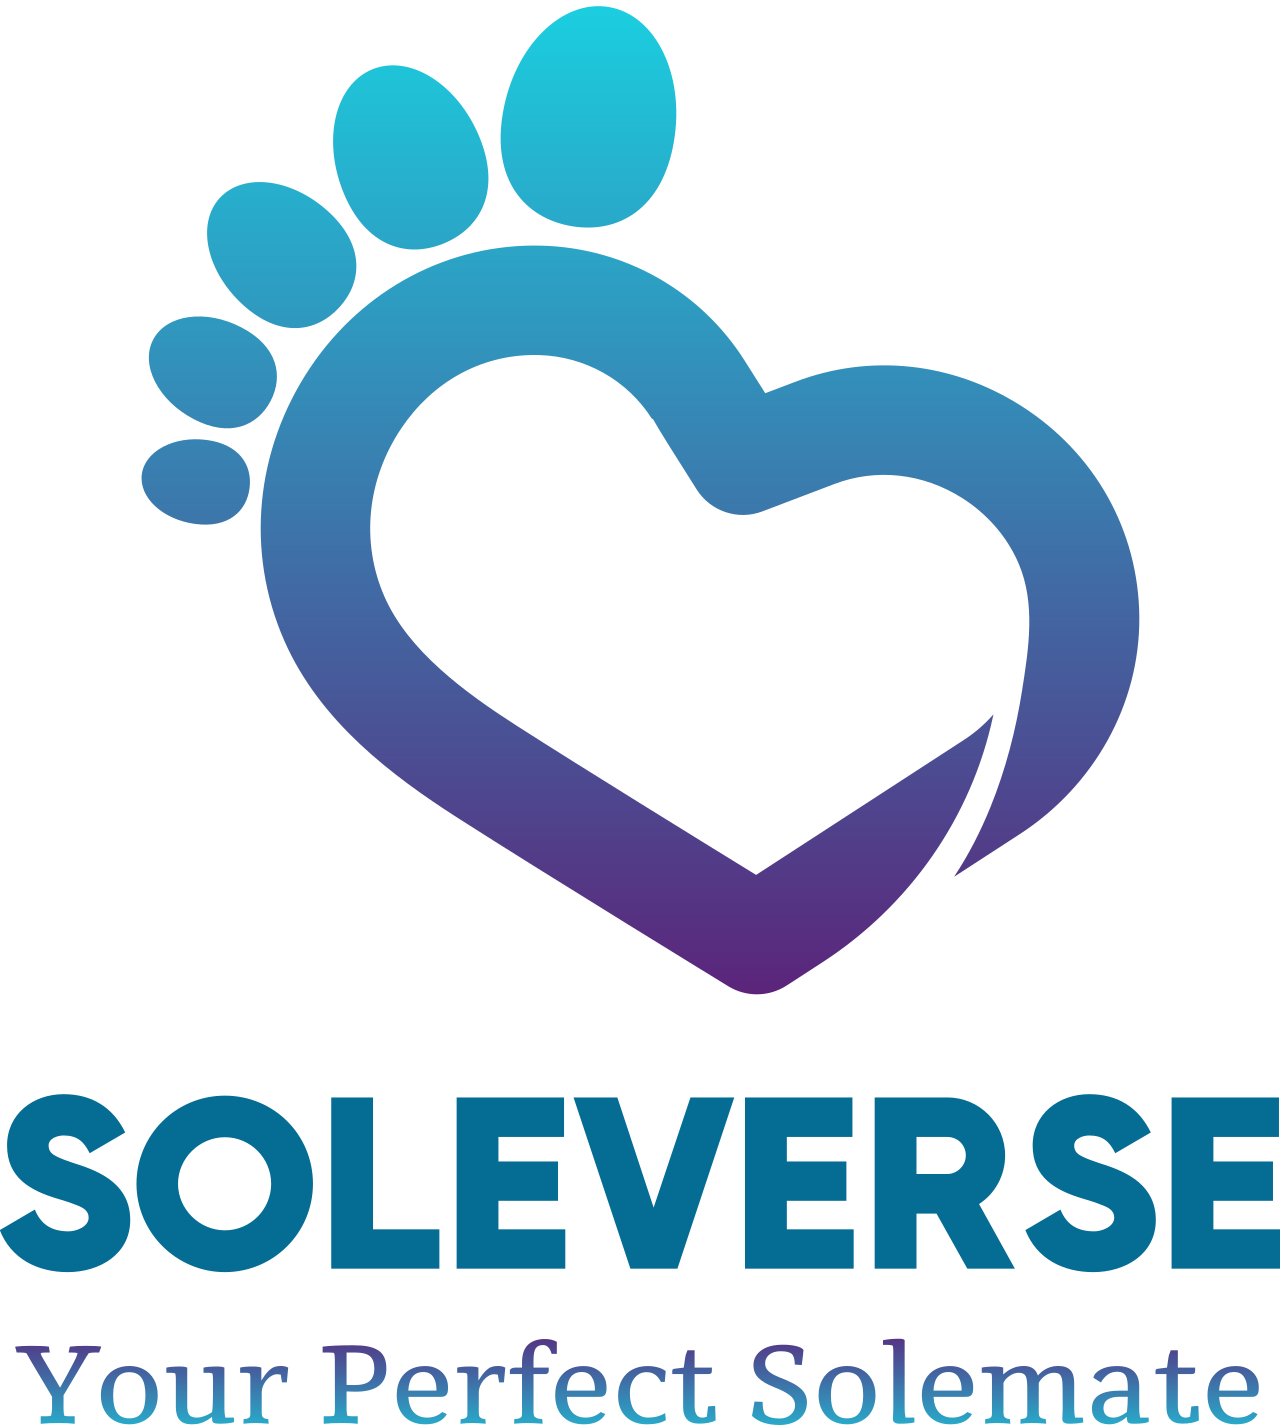 Soleverse's logo